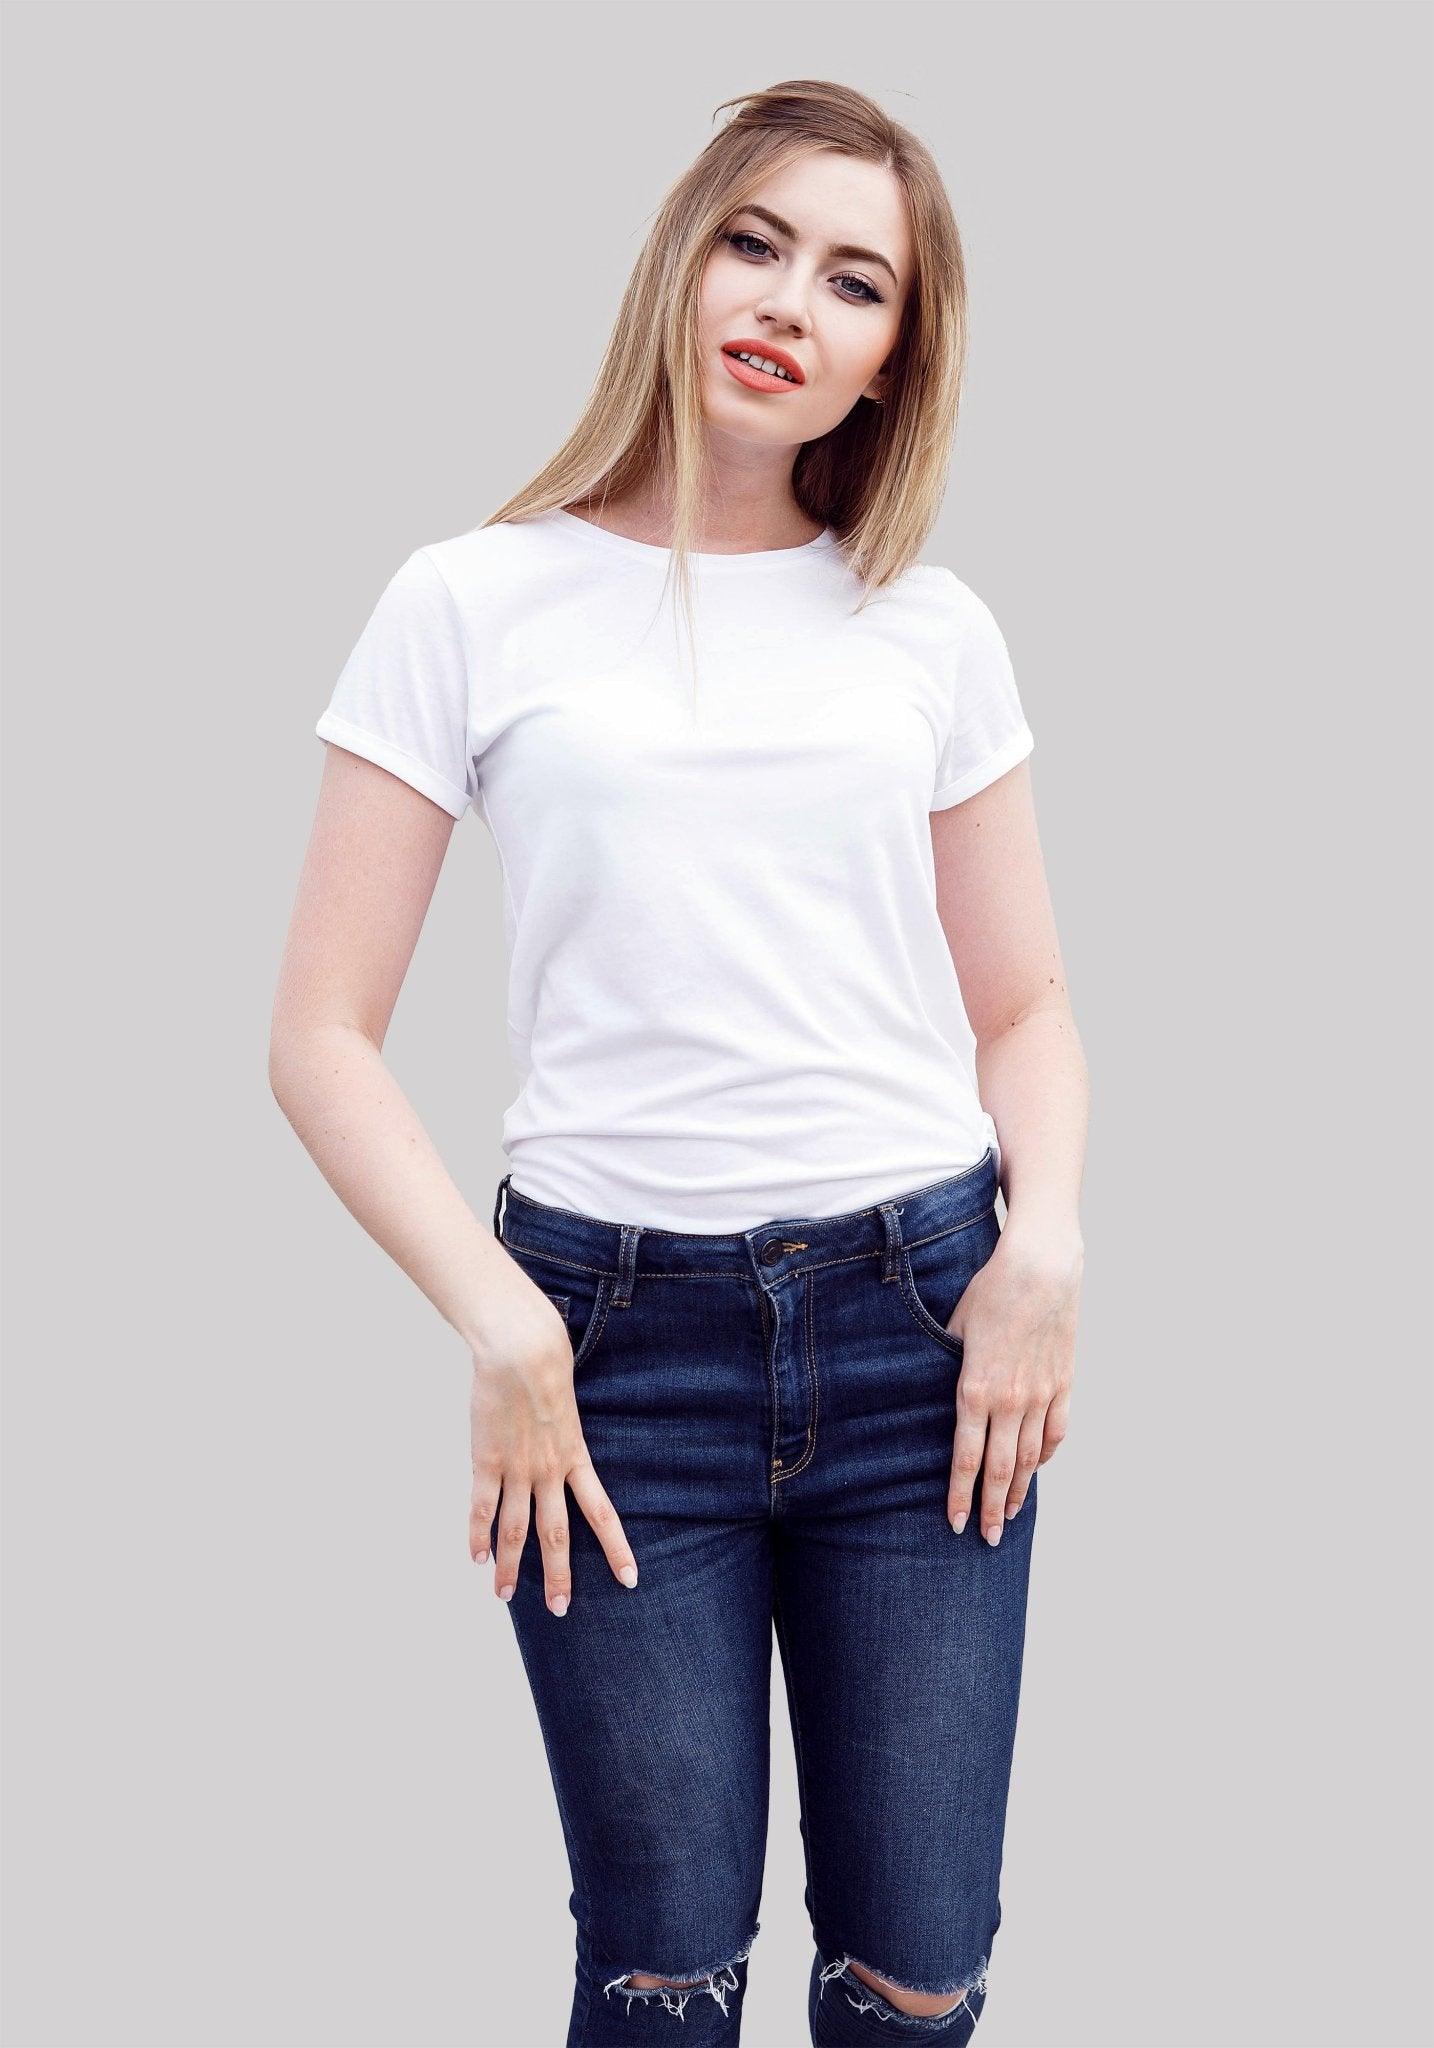 Solid Plain T Shirt Combo For Women In White Colour Variant